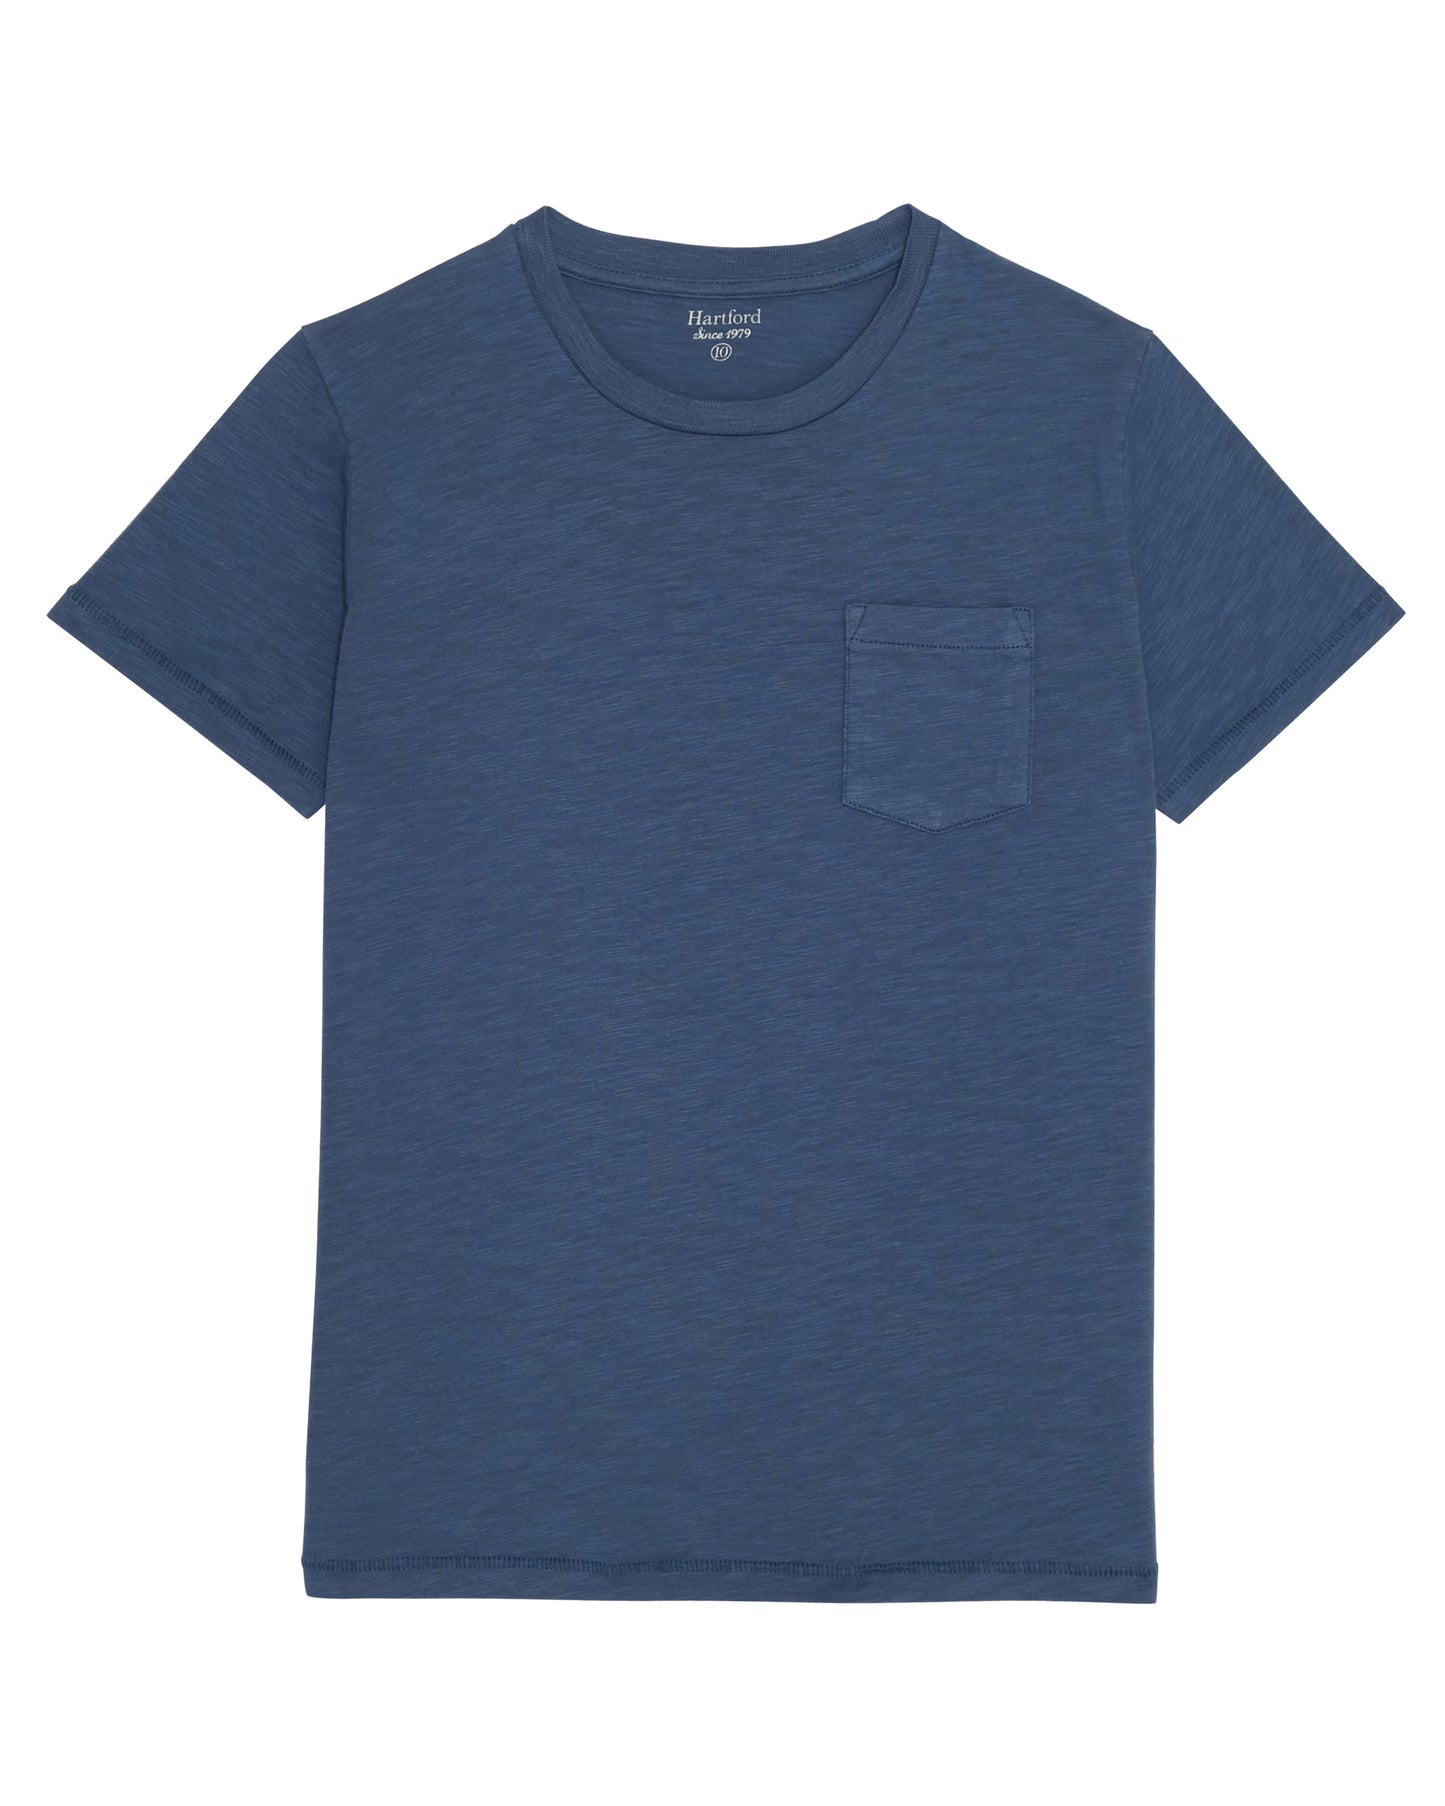 Tee Shirt Garçon en coton slub Bleu cobalt